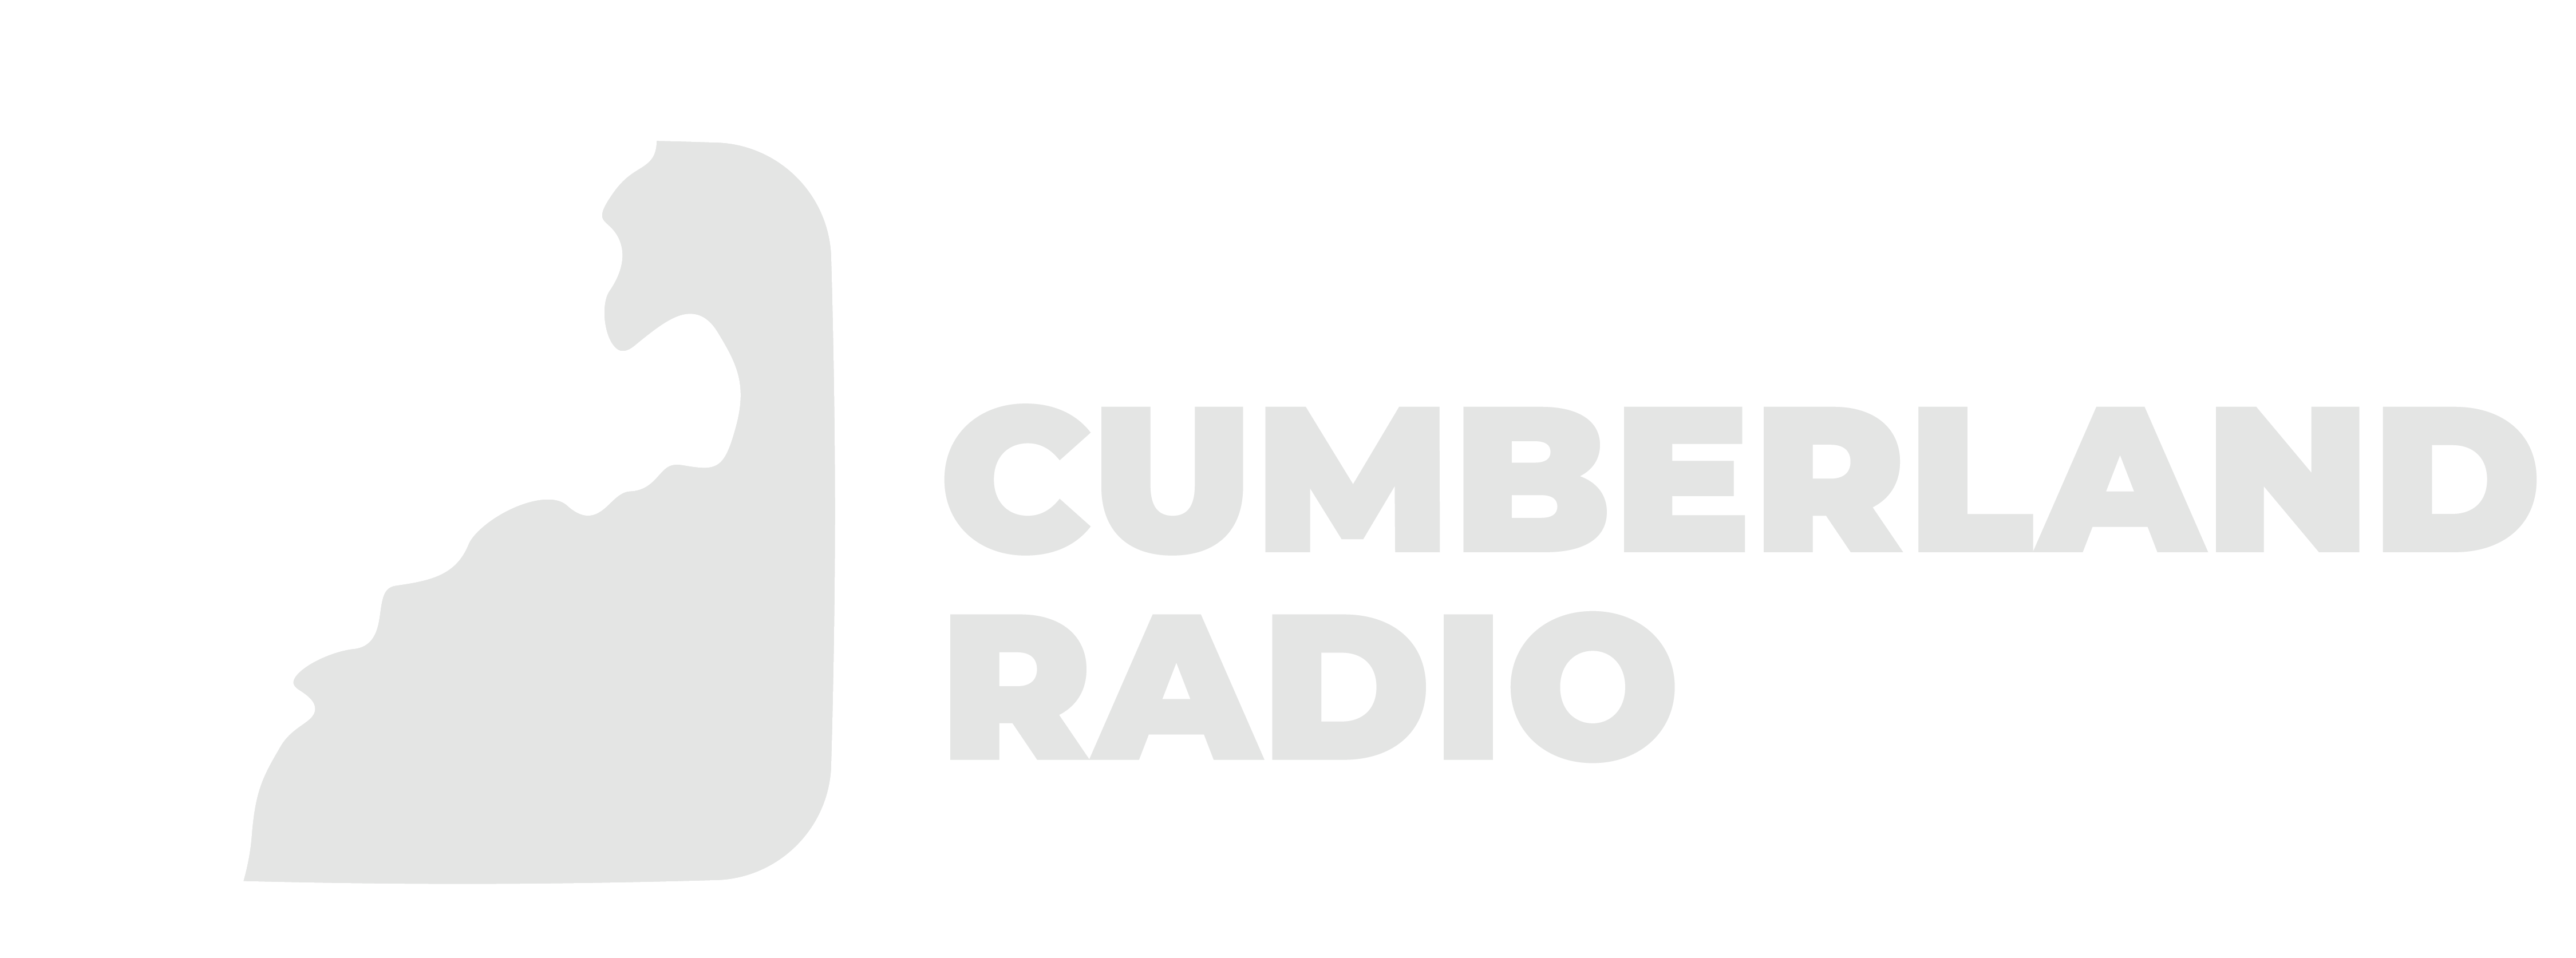 Cumberland Radio